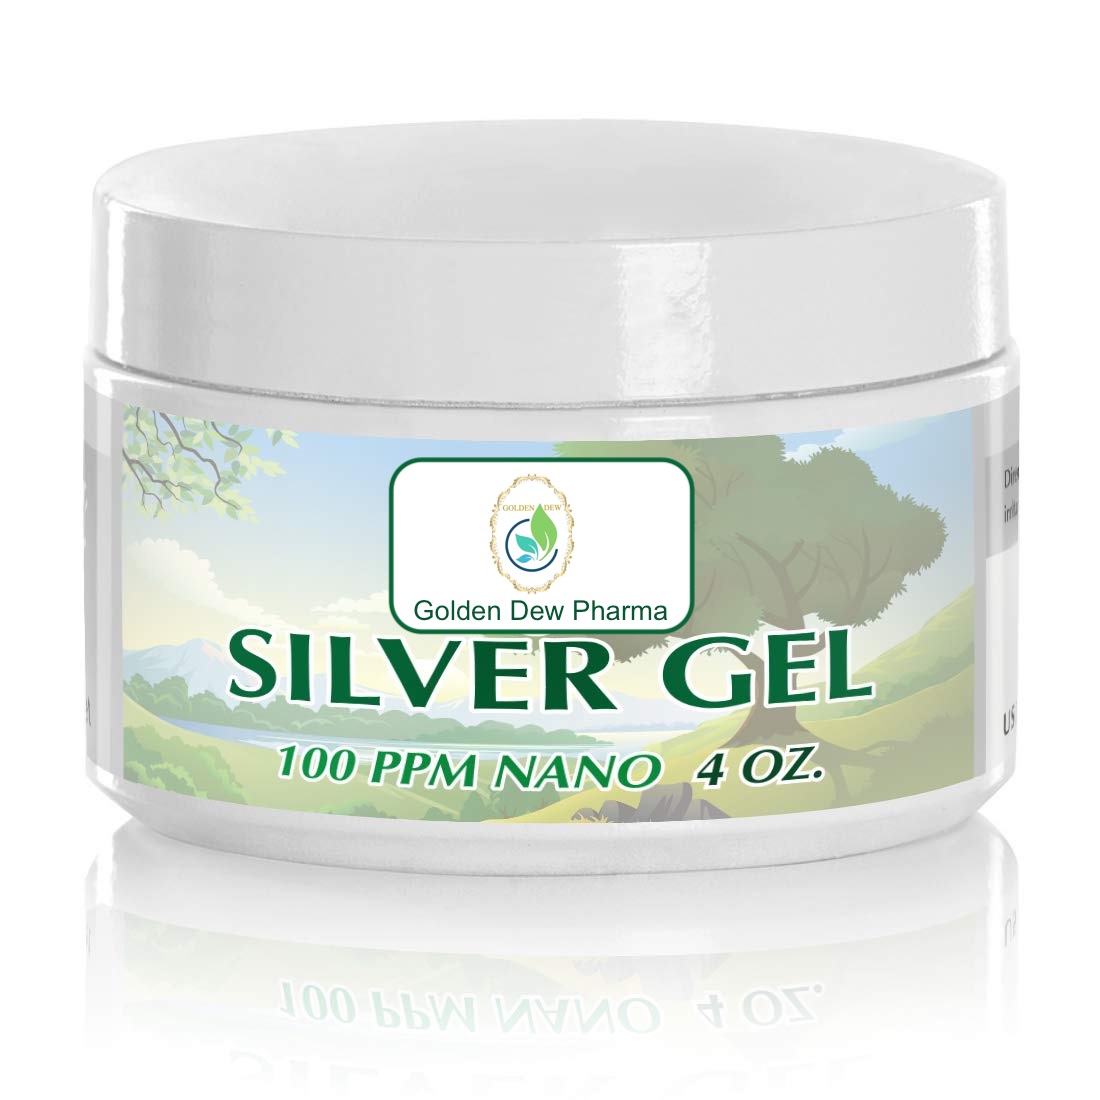 Colloidal Silver Gel